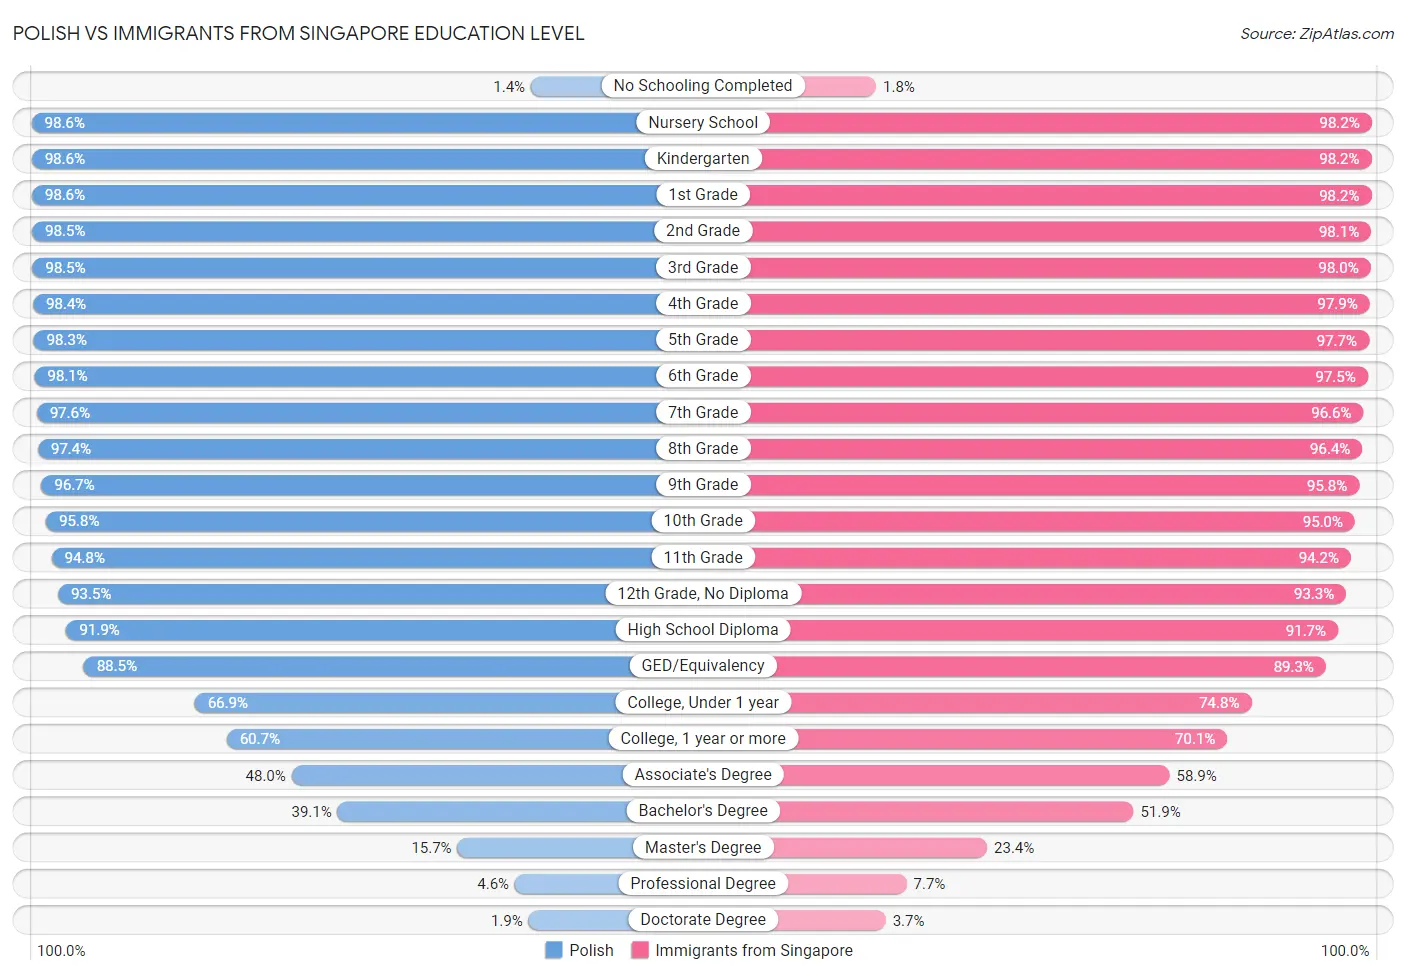 Polish vs Immigrants from Singapore Education Level